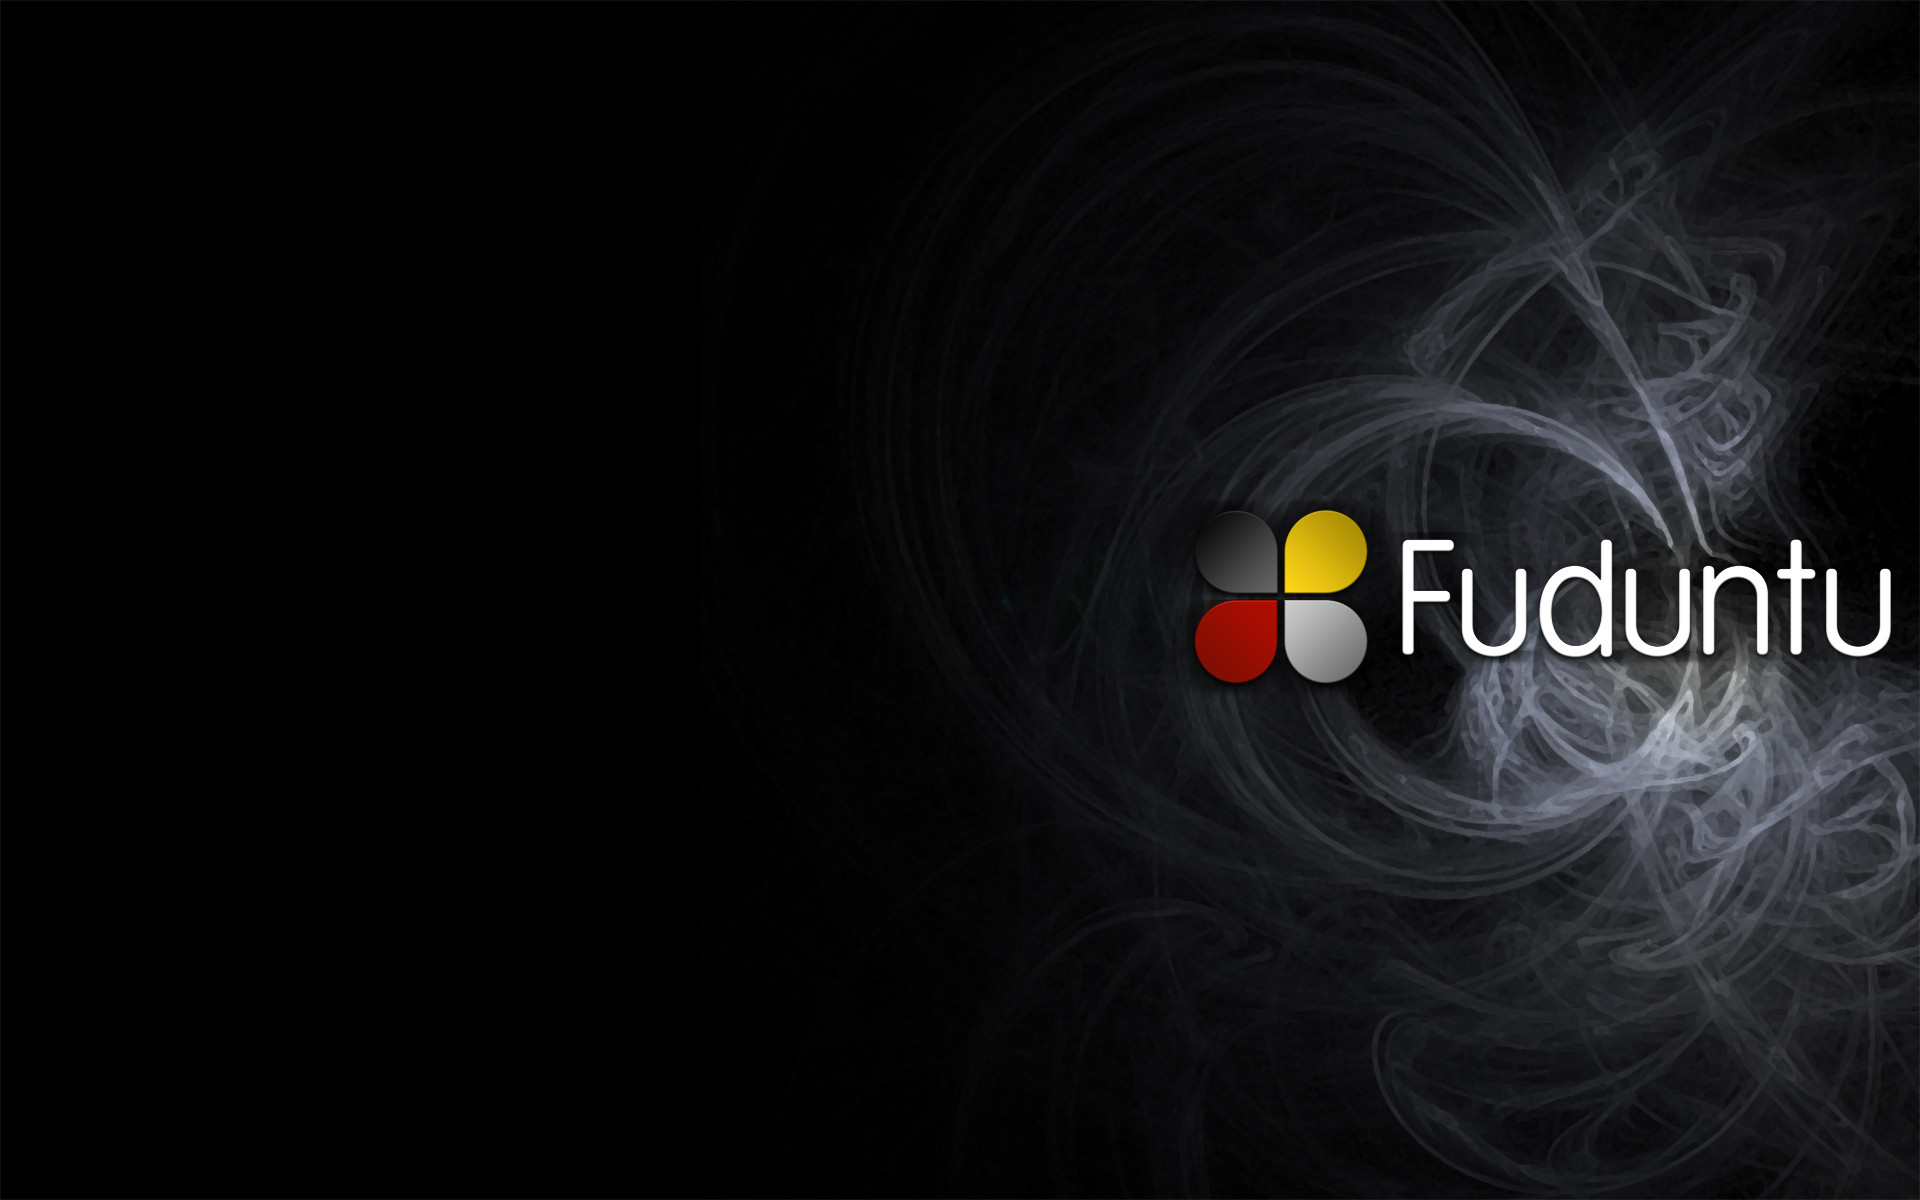 Linux Fuduntu 2013.1 Offer Steam and Netflix Support